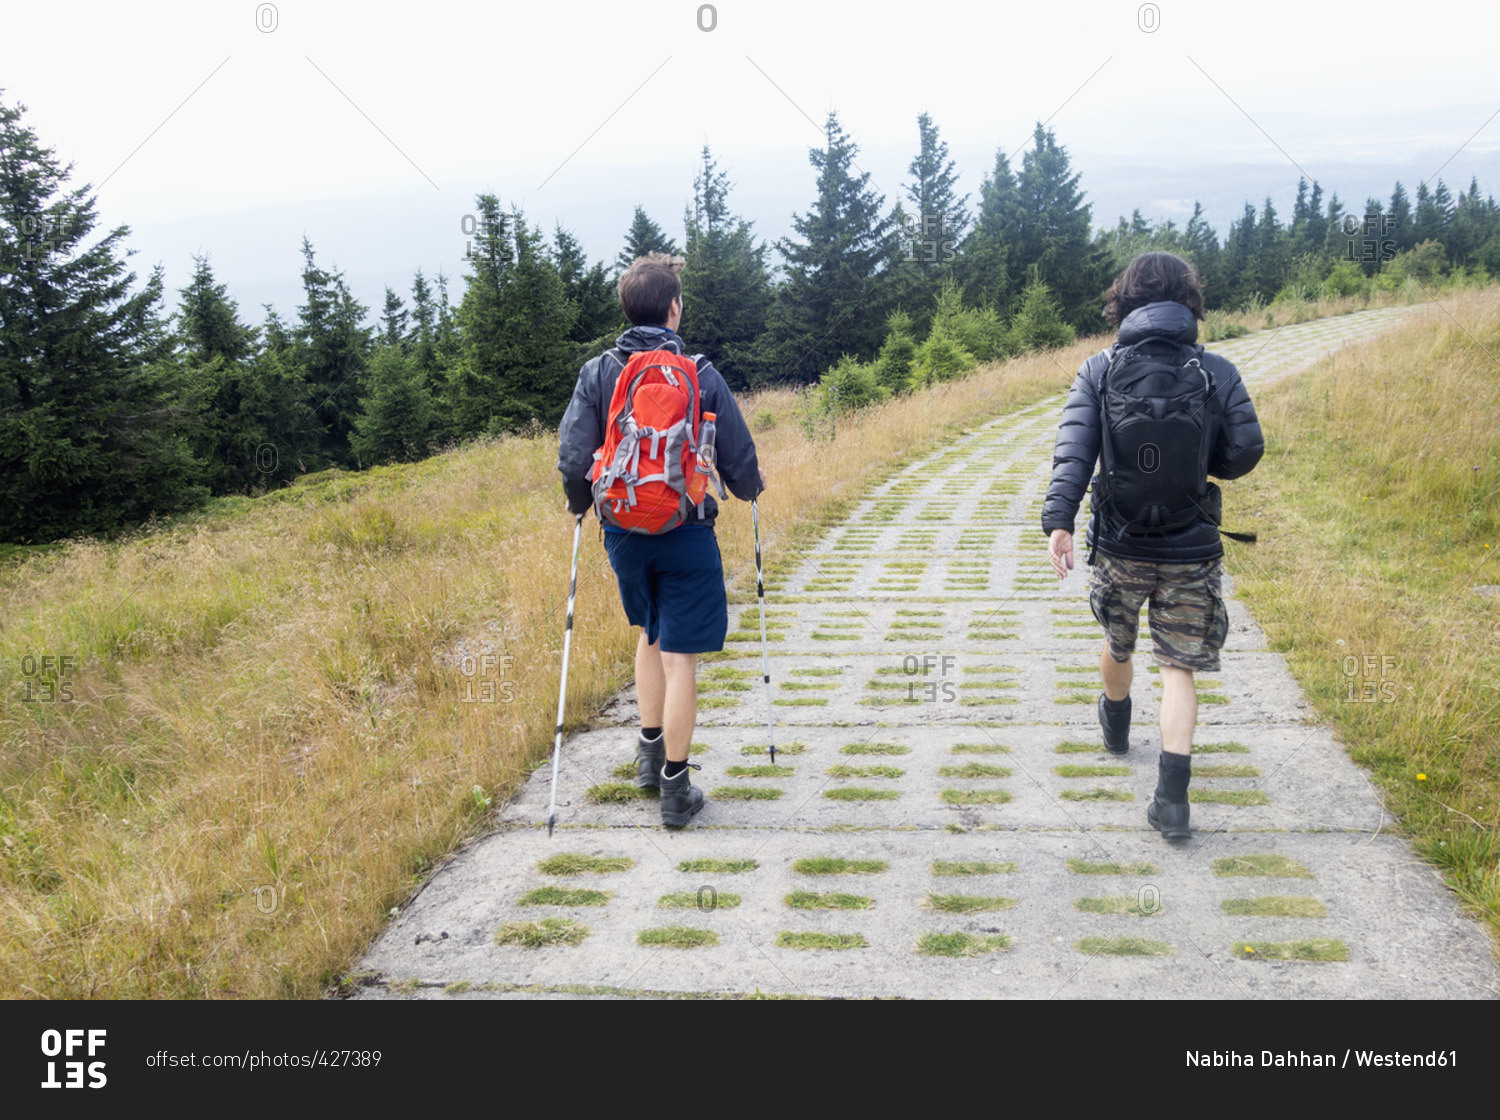 Germany, Harz, Brocken, back view of two friends hiking